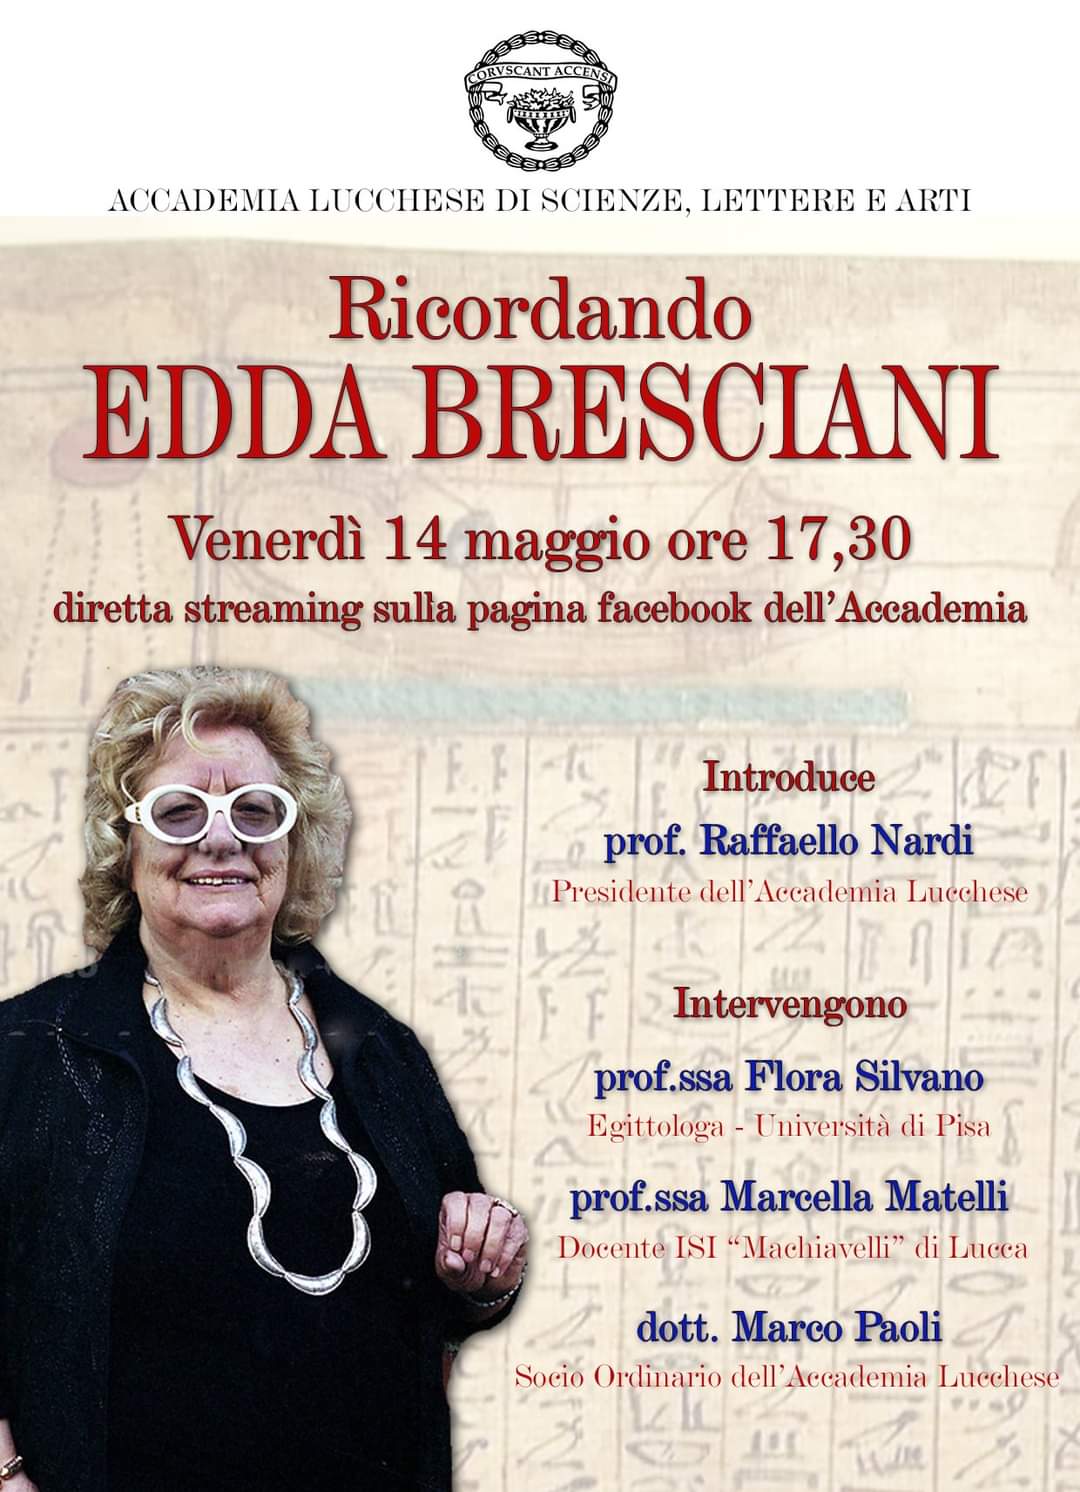 Ricordando Edda Bresciani